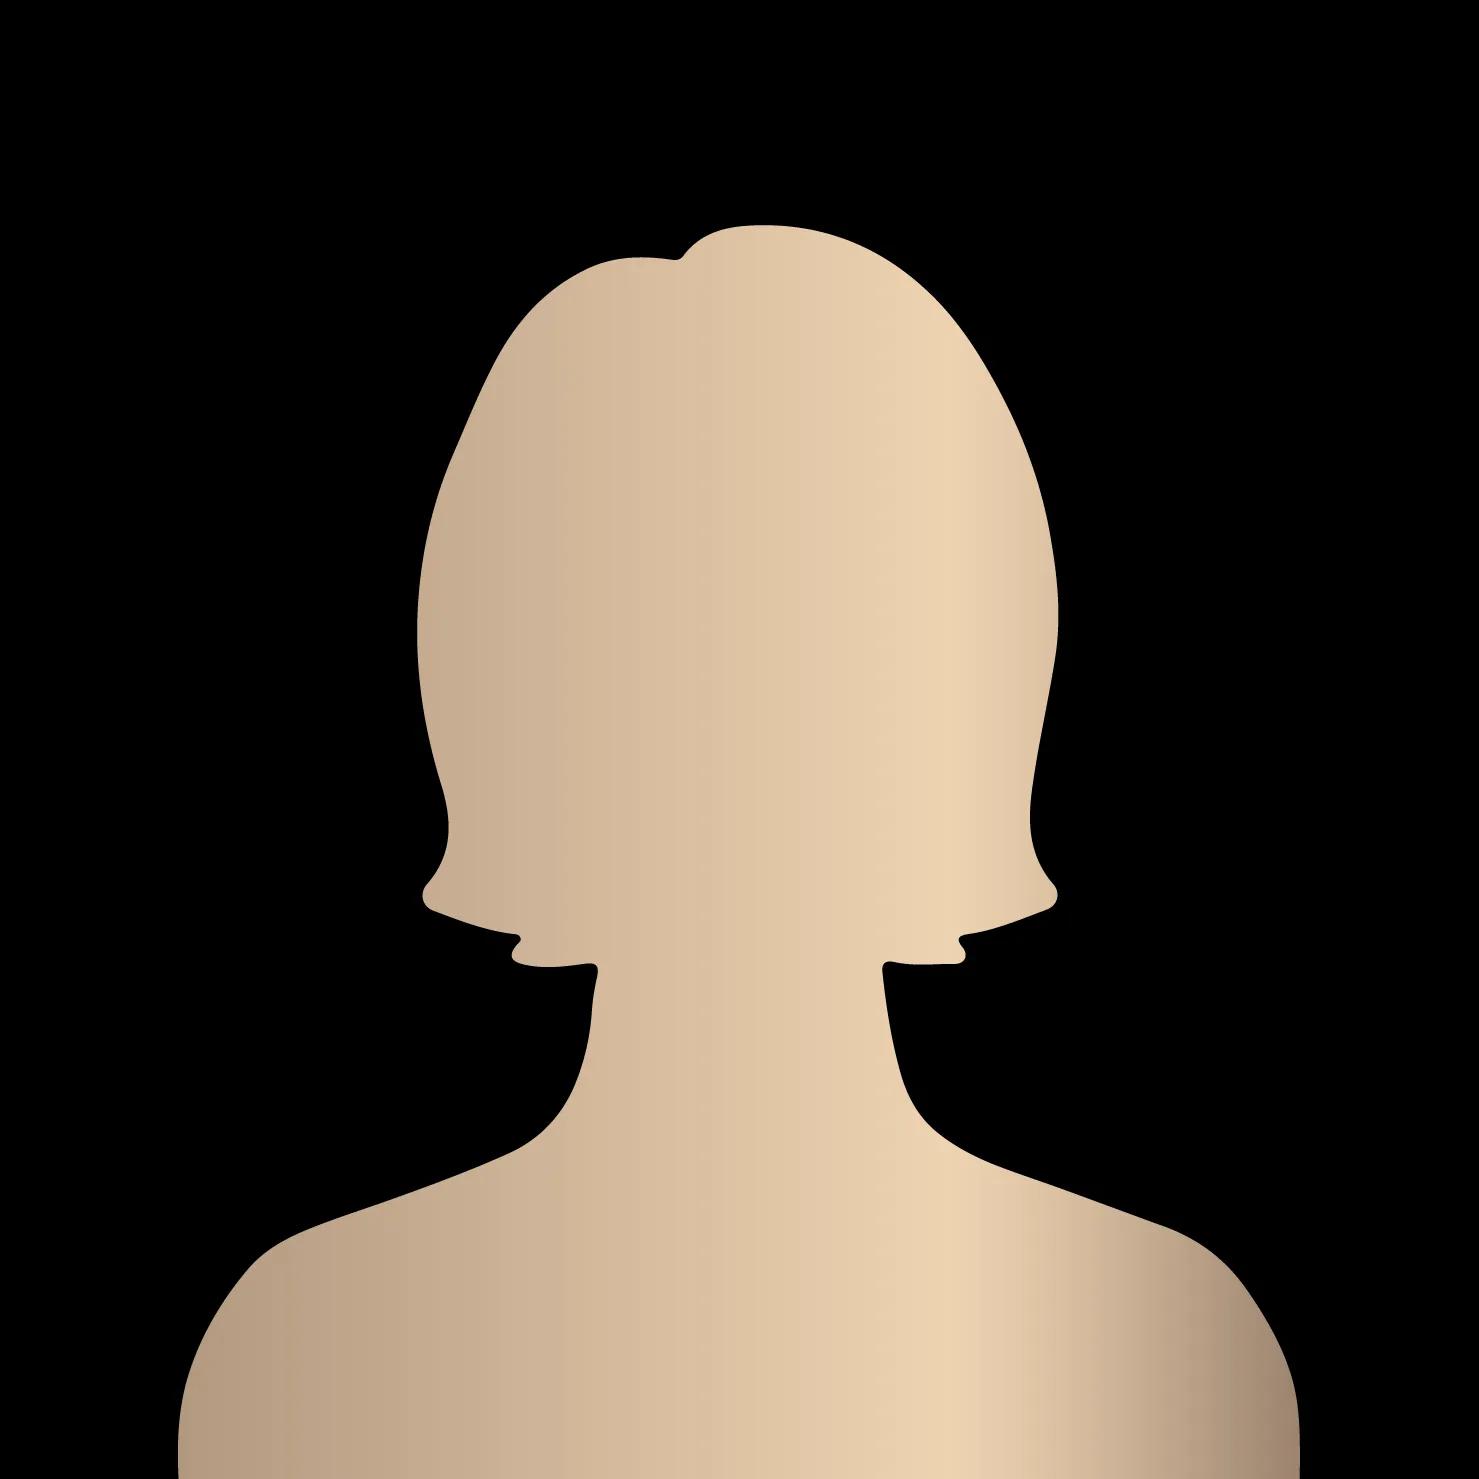 sirine mokded Profile Picture